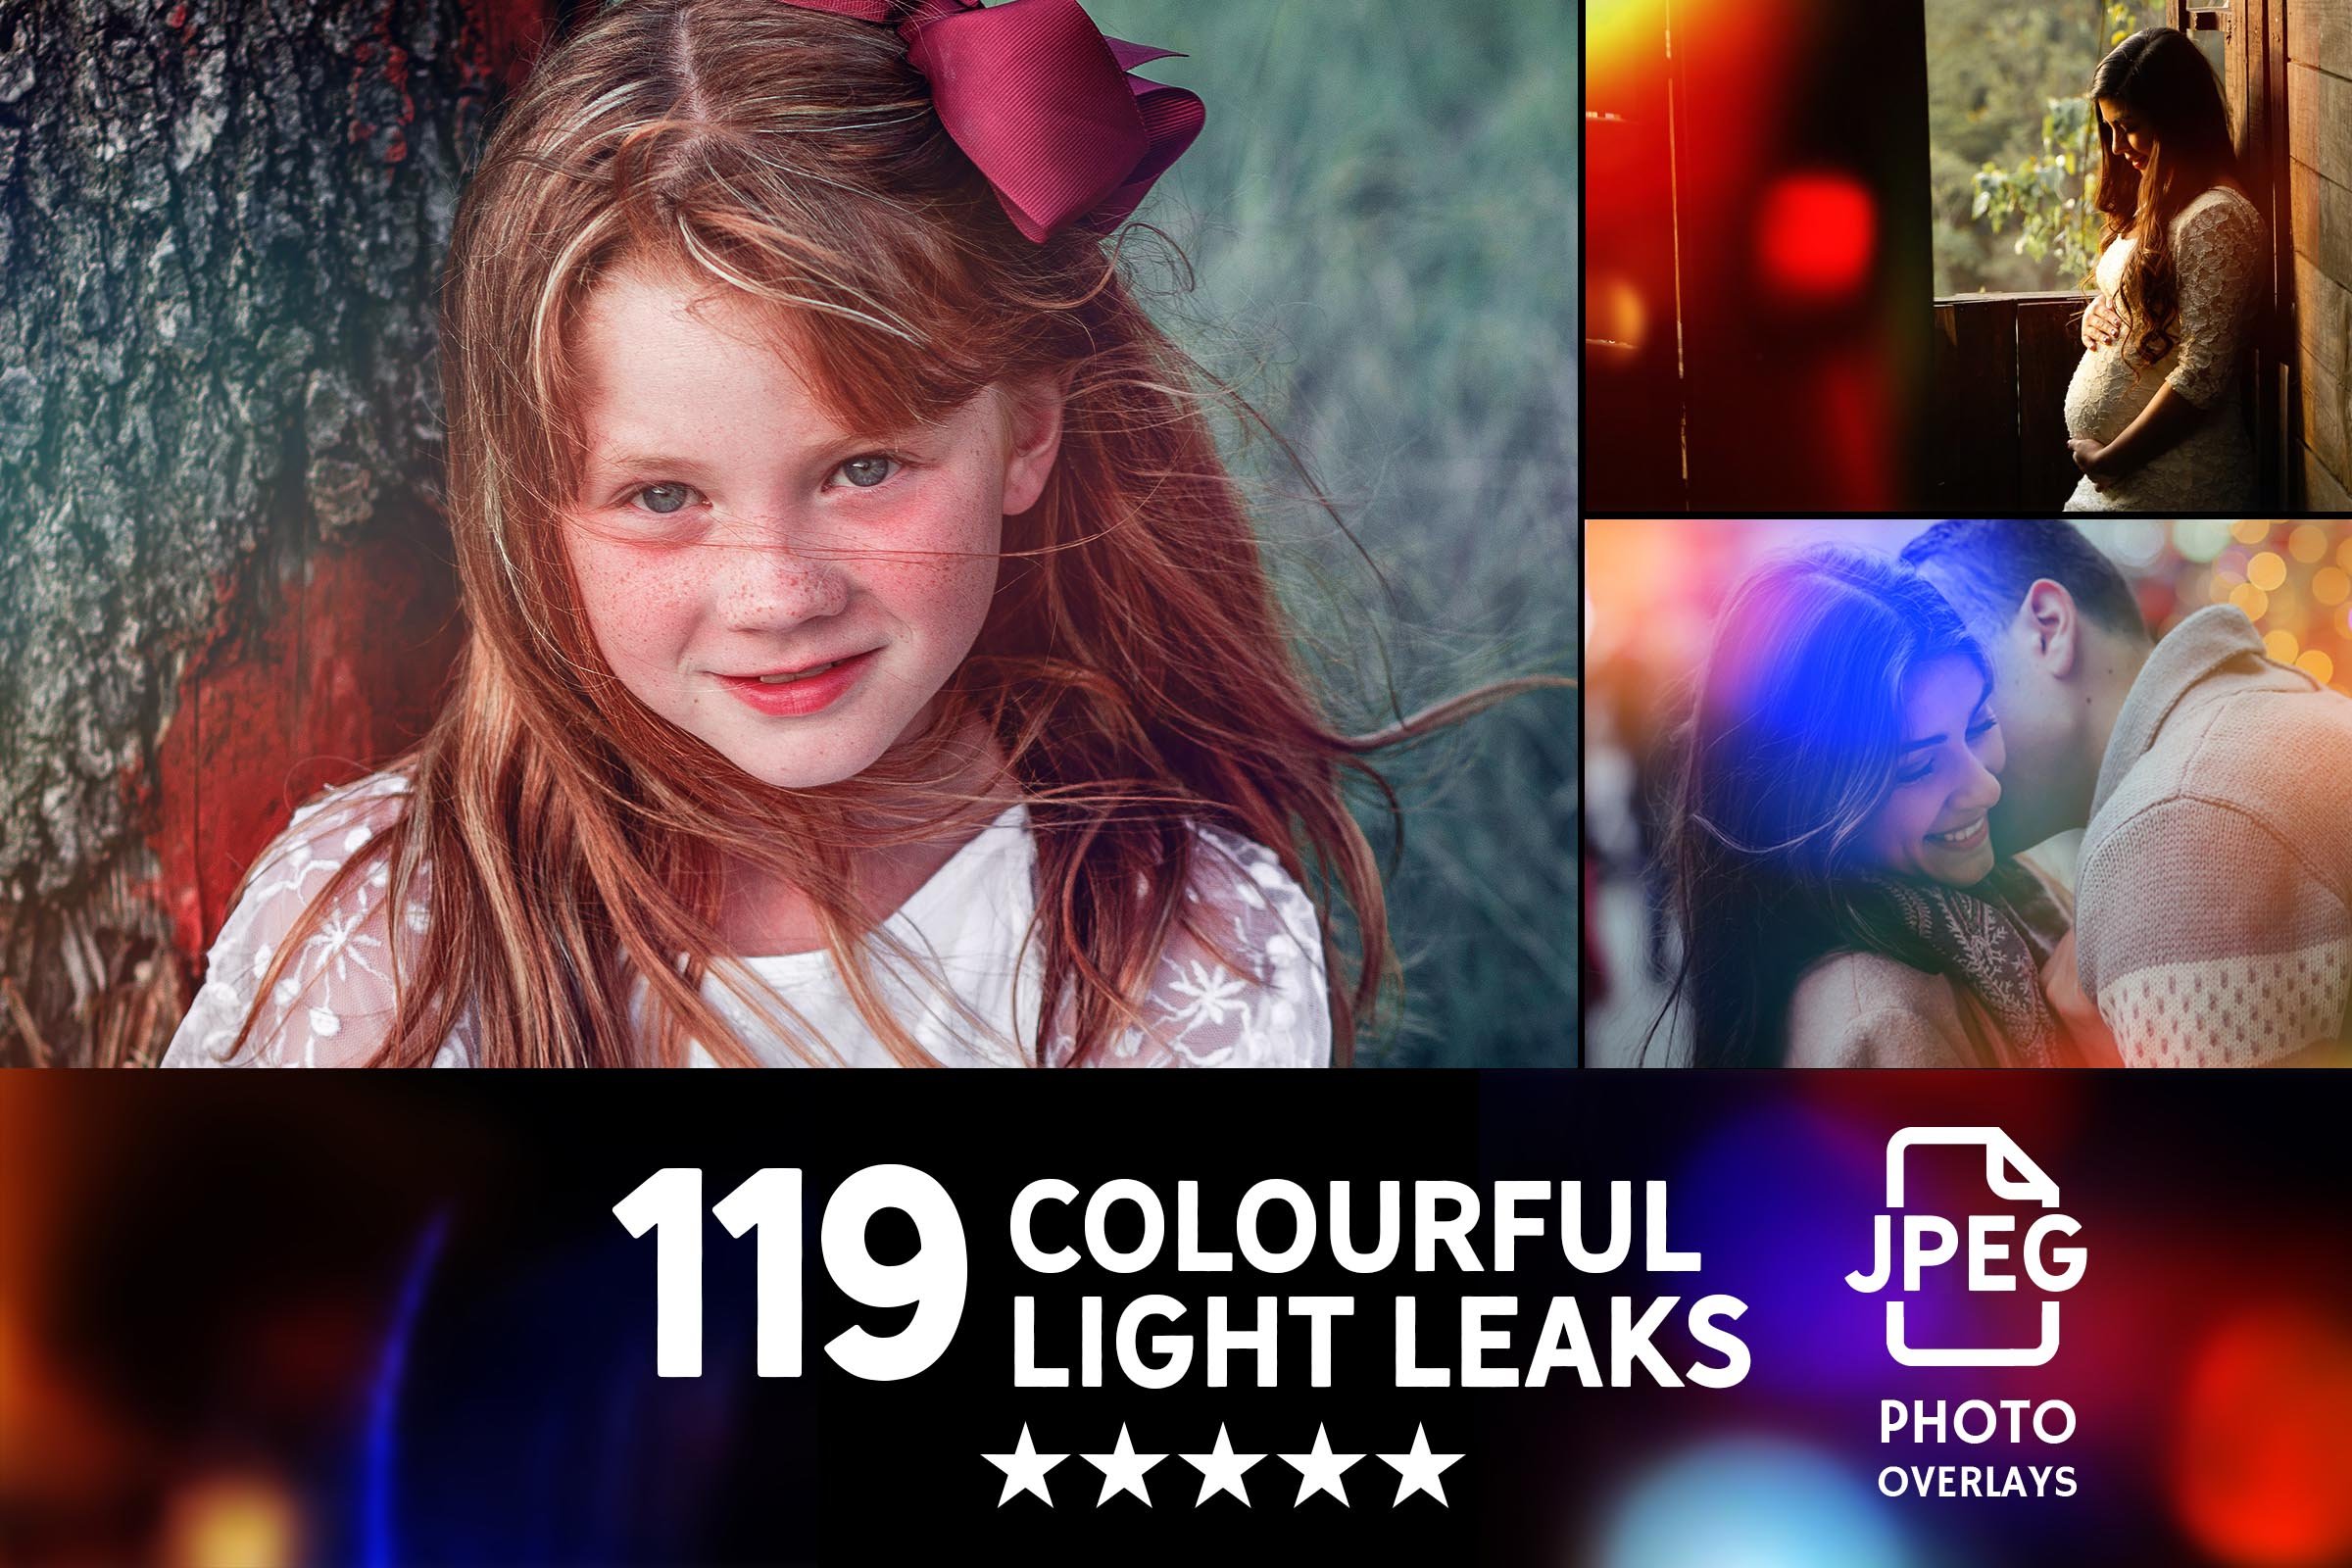 023. 119 colorful light leaks photo overlays 927